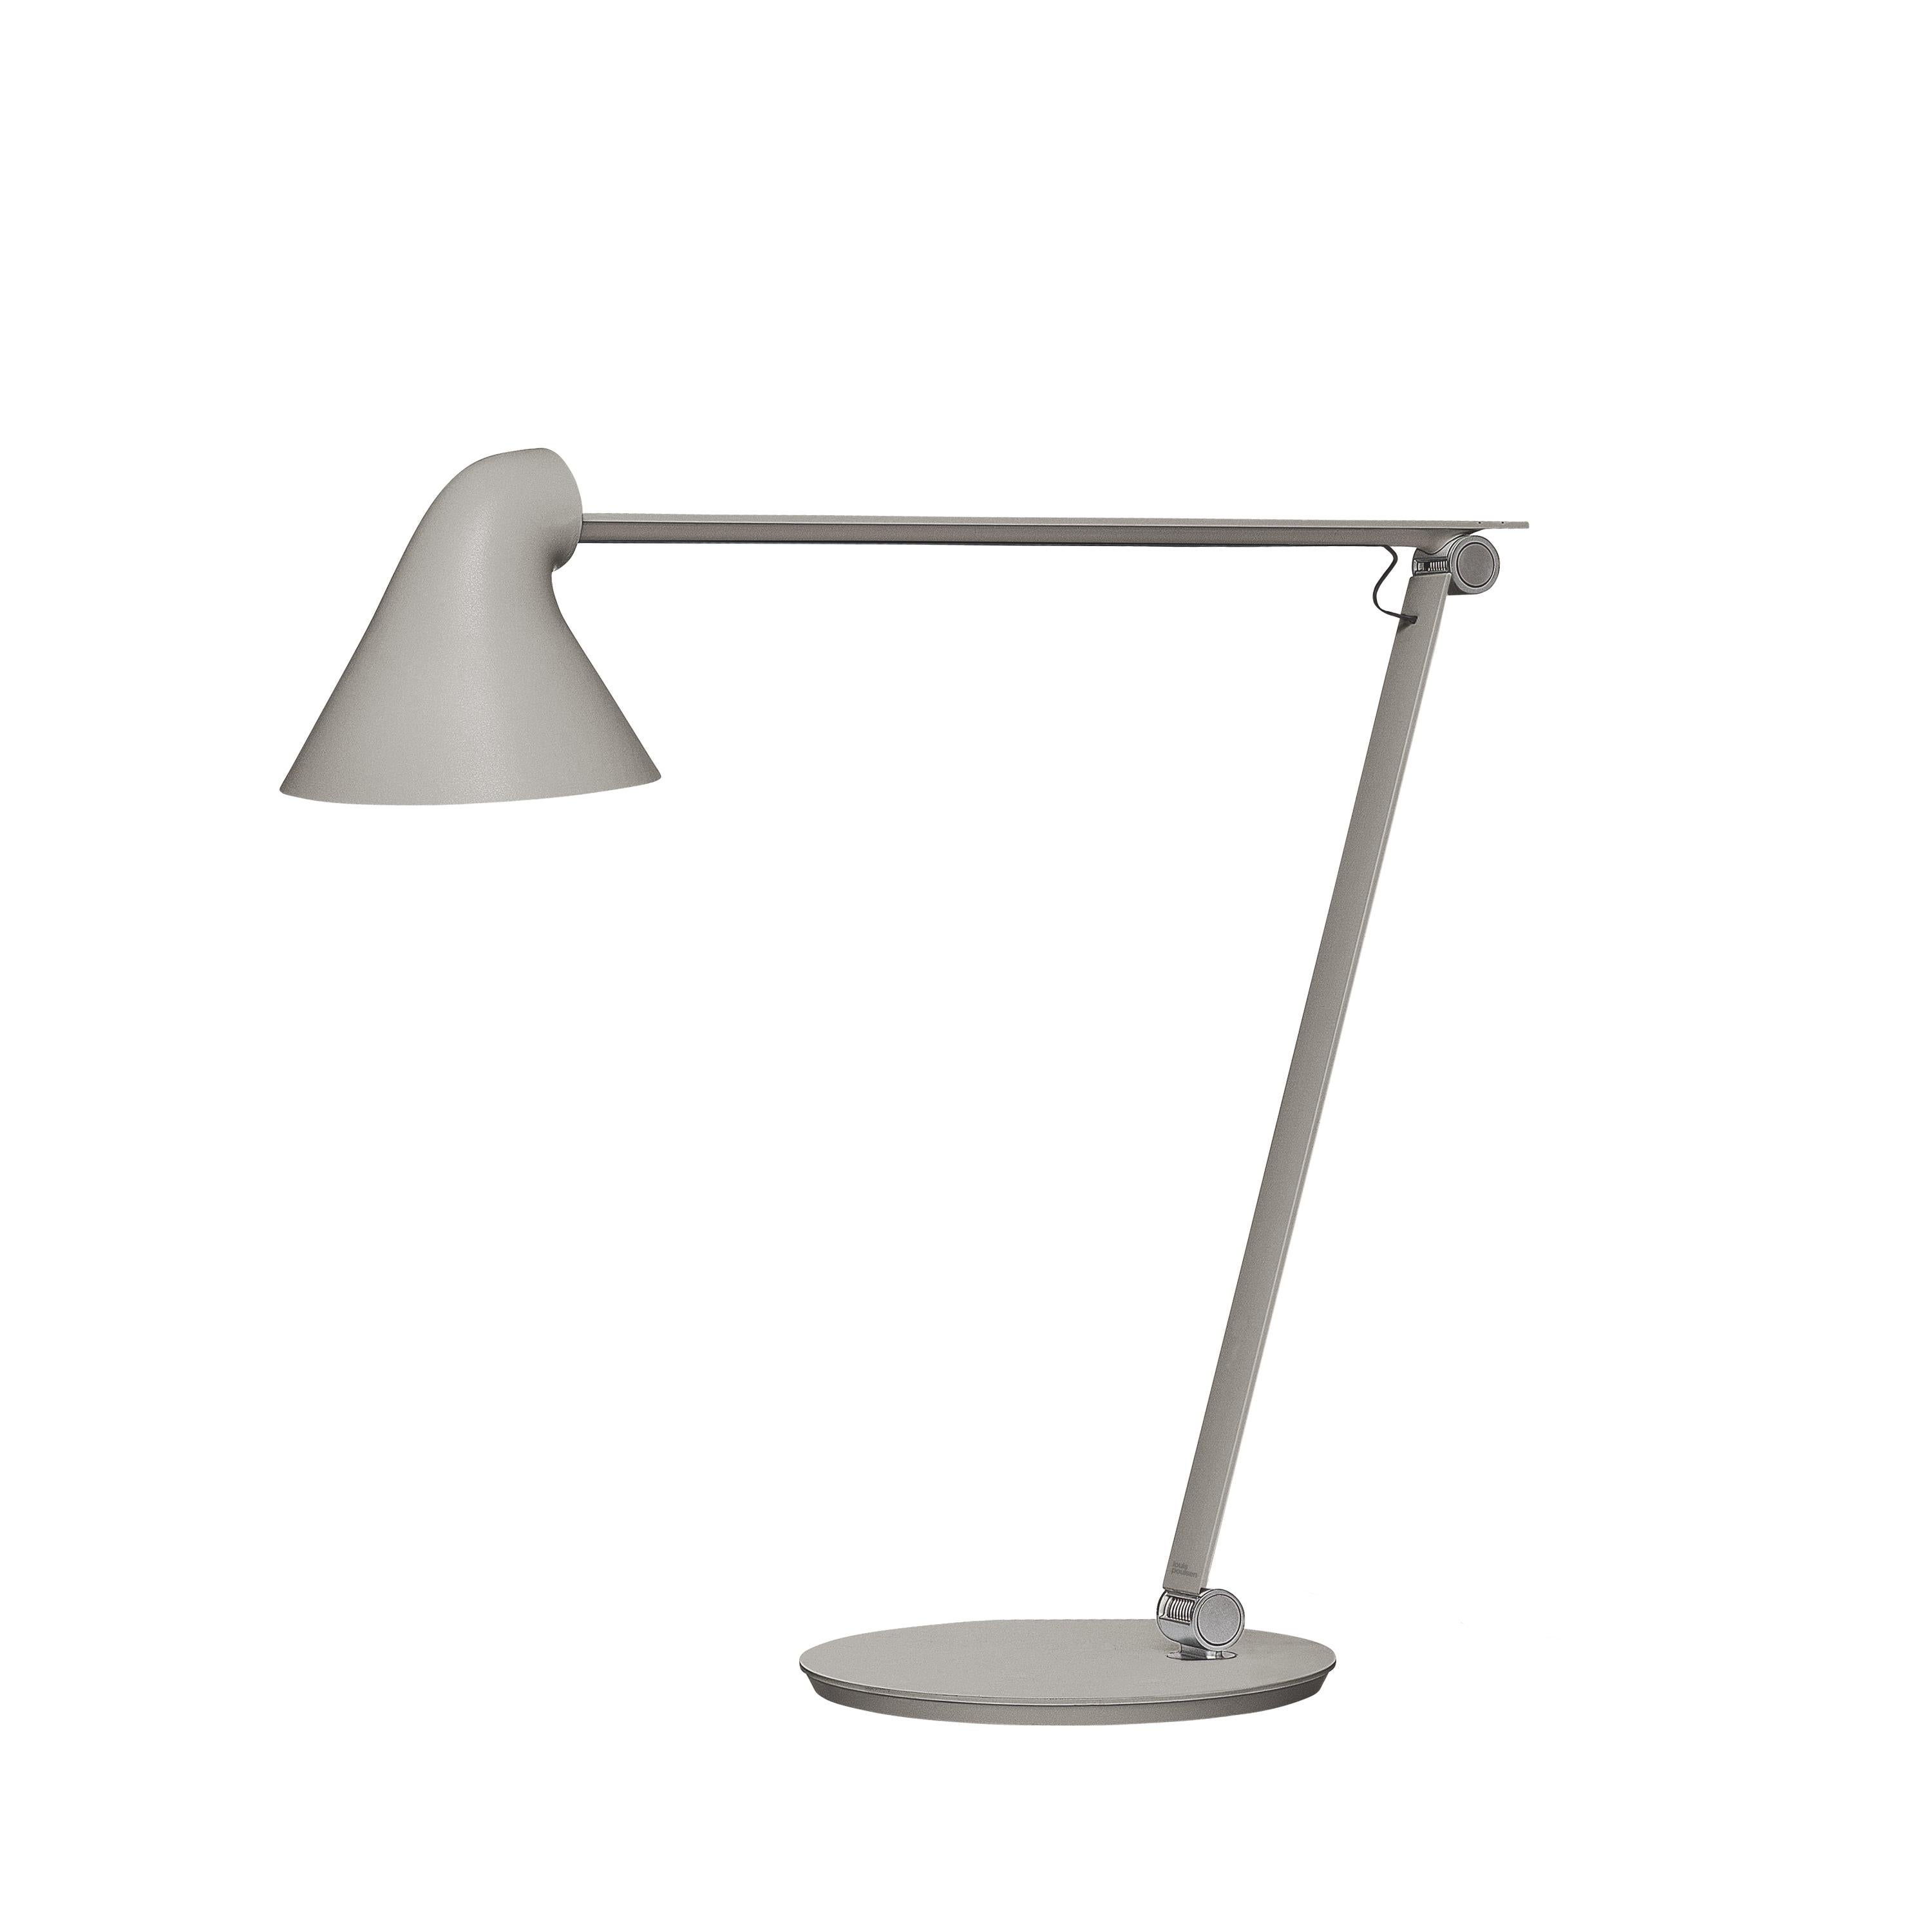 En vente : Gray (light aluminum grey.jpg) Lampe de bureau Louis Poulsen NJP par Nendo, Oki Sato